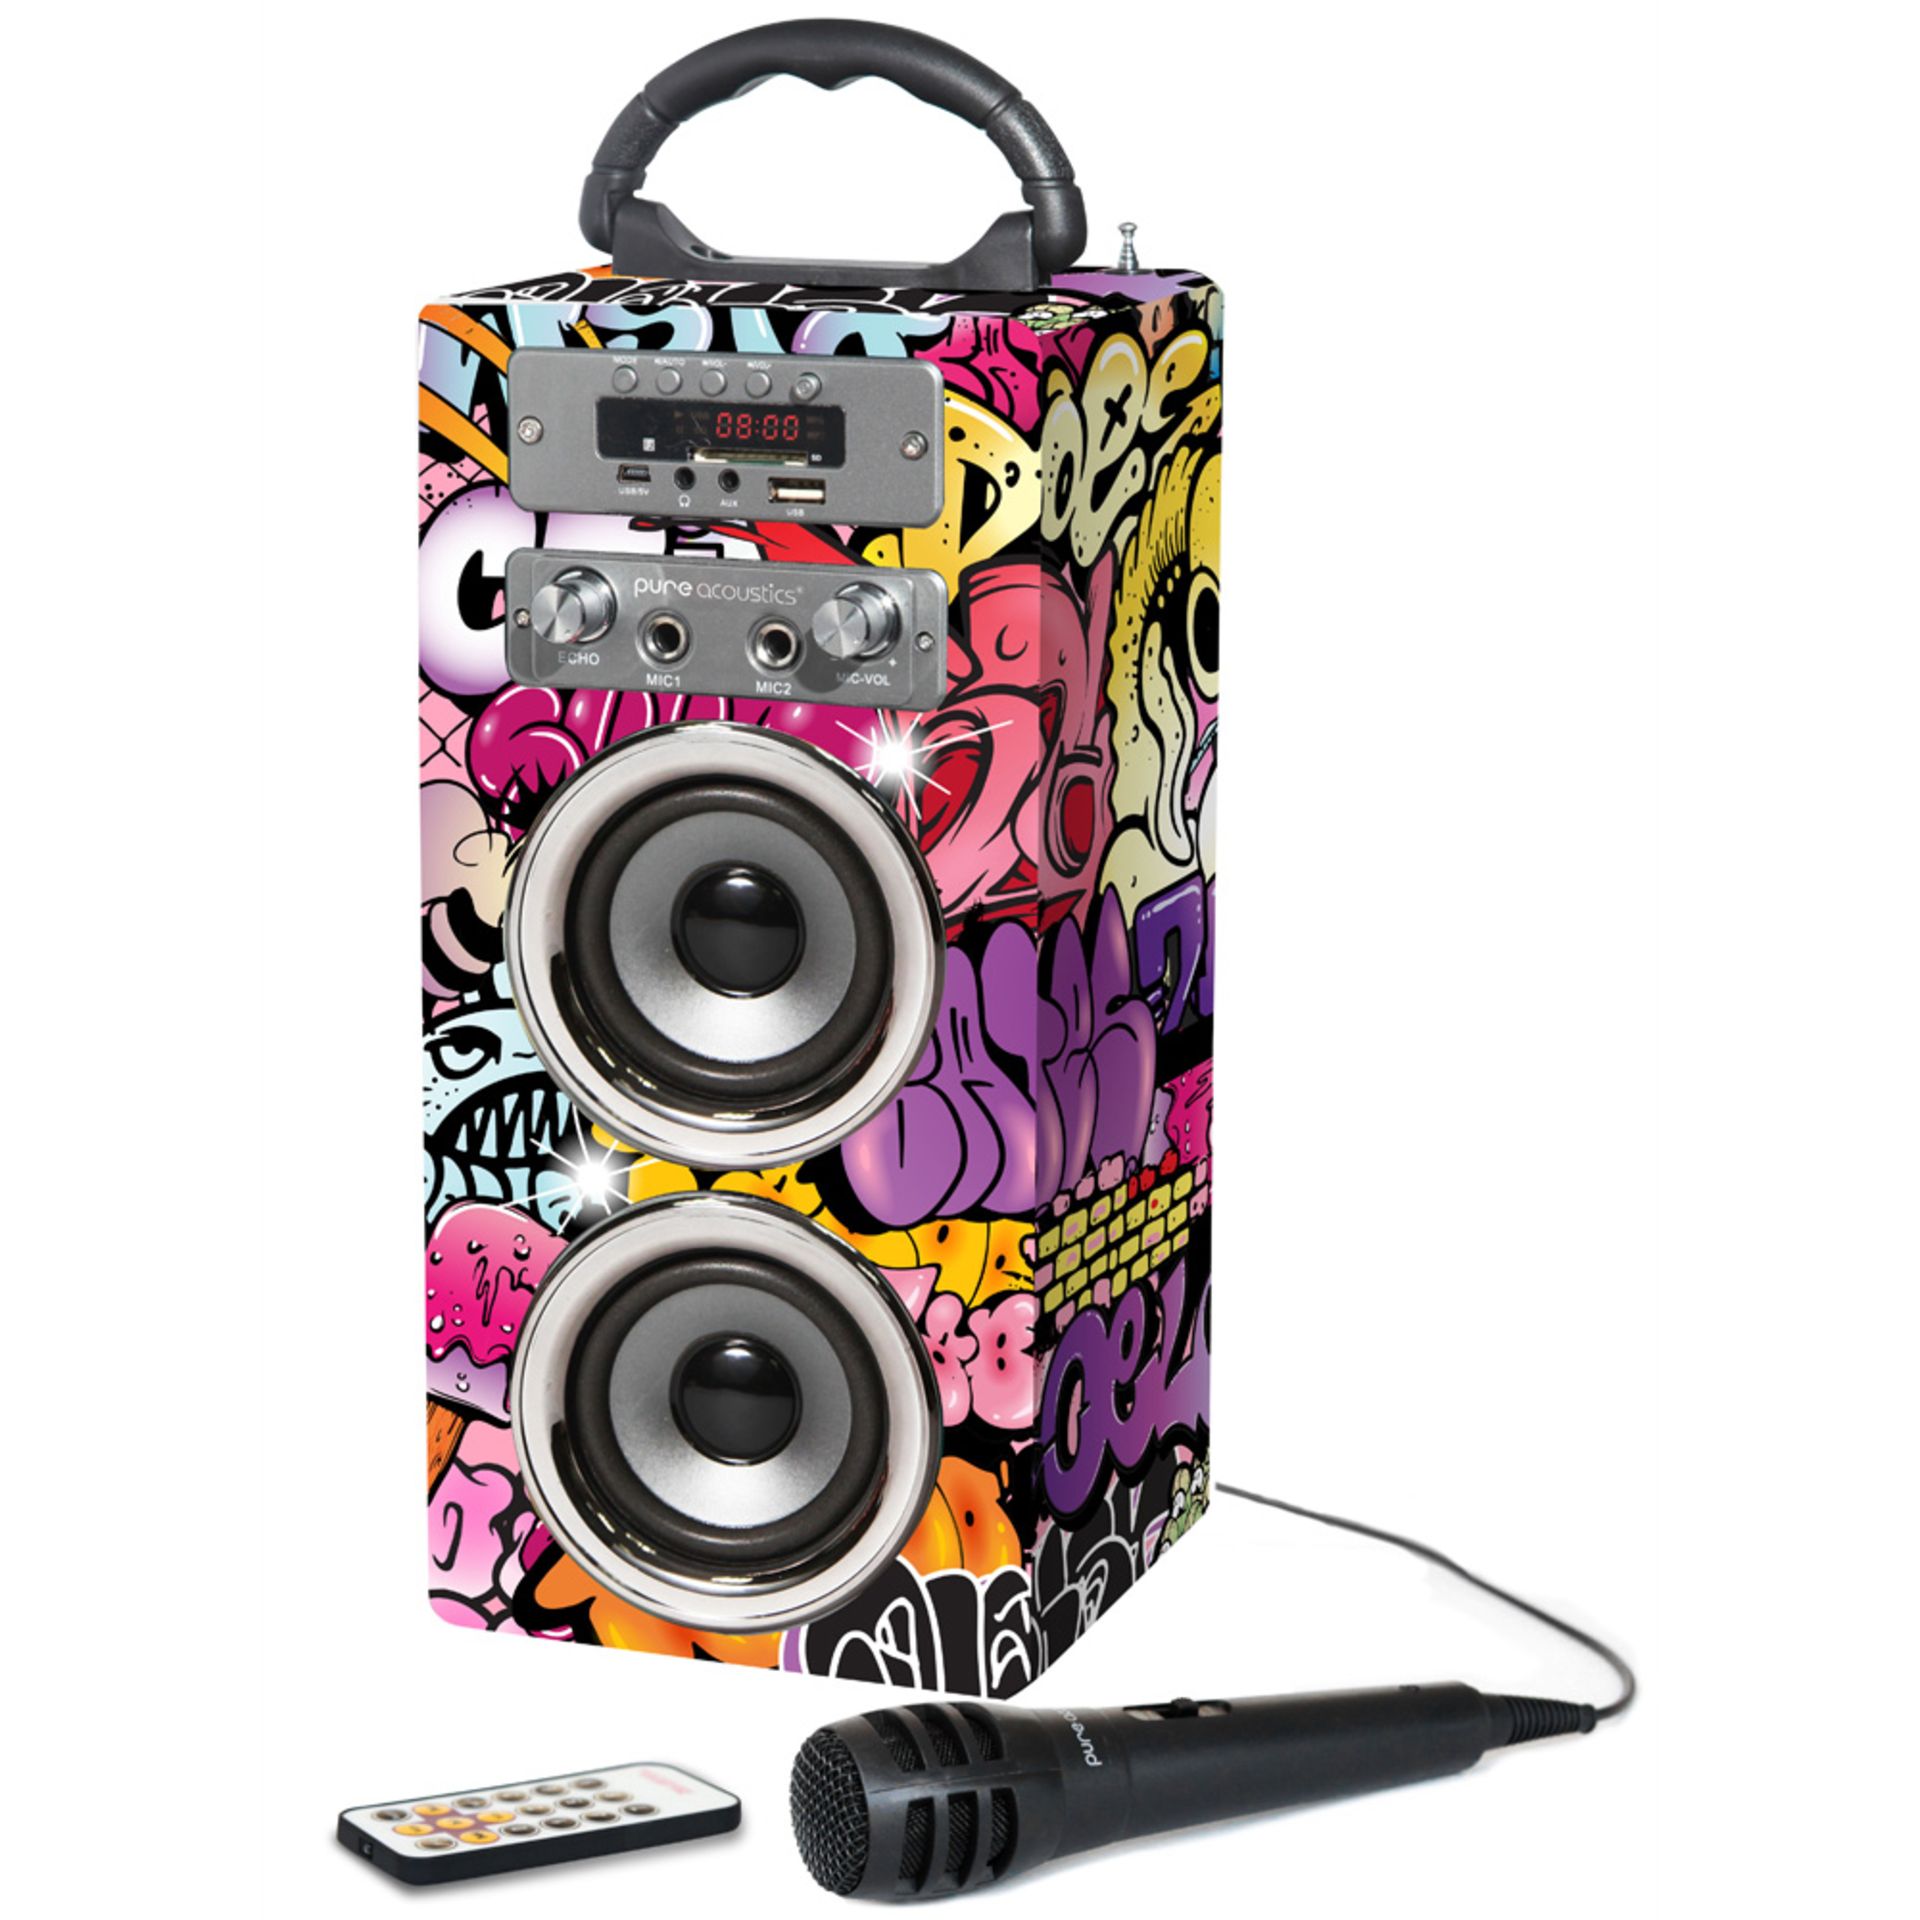 V *TRADE QTY* Brand New Pure Acoustics Graffiti Portable Karaoke Machine ISP £29.98 (Amazon) X 4